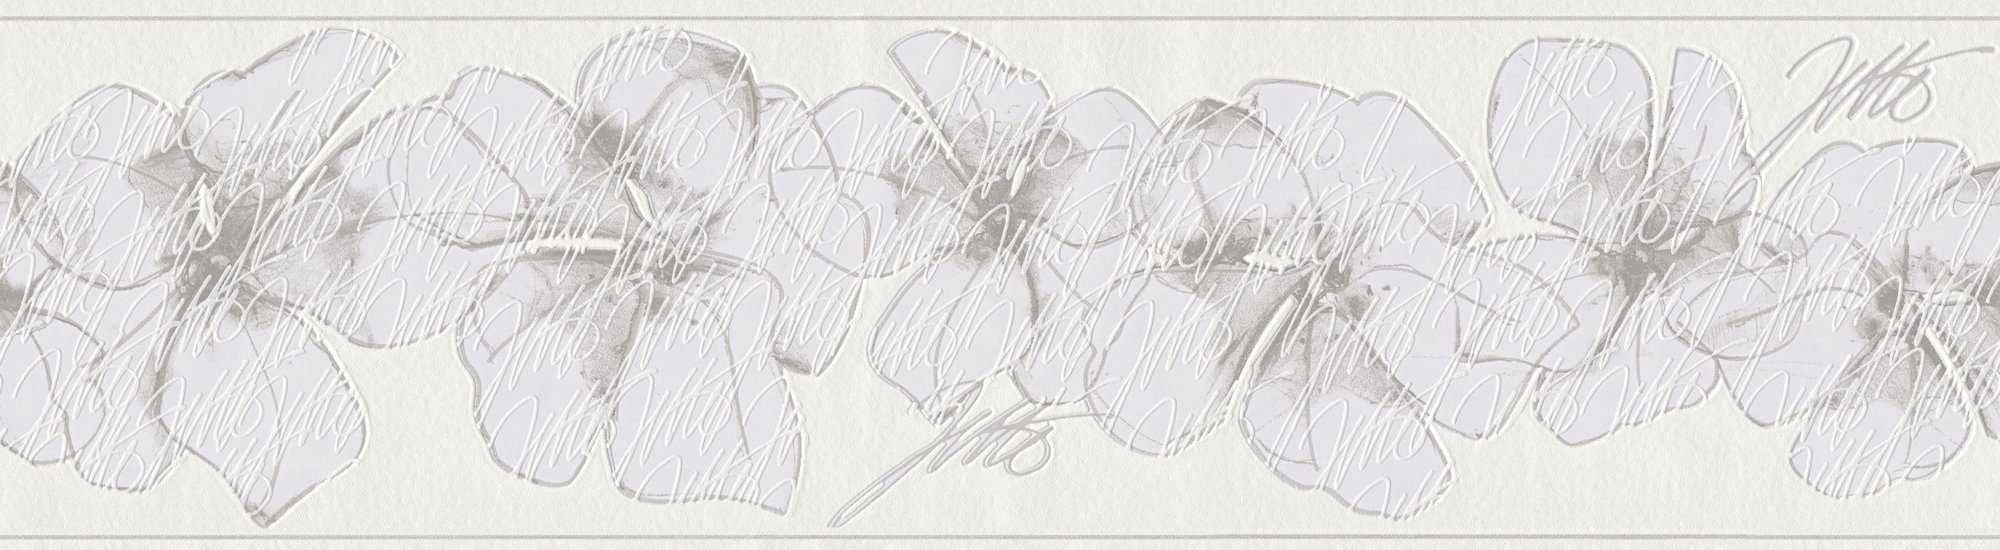 A.S. Grau Vinyltapete, Wandtapete Papiertapete Blumen Blumentapete Création 959913 Tapete